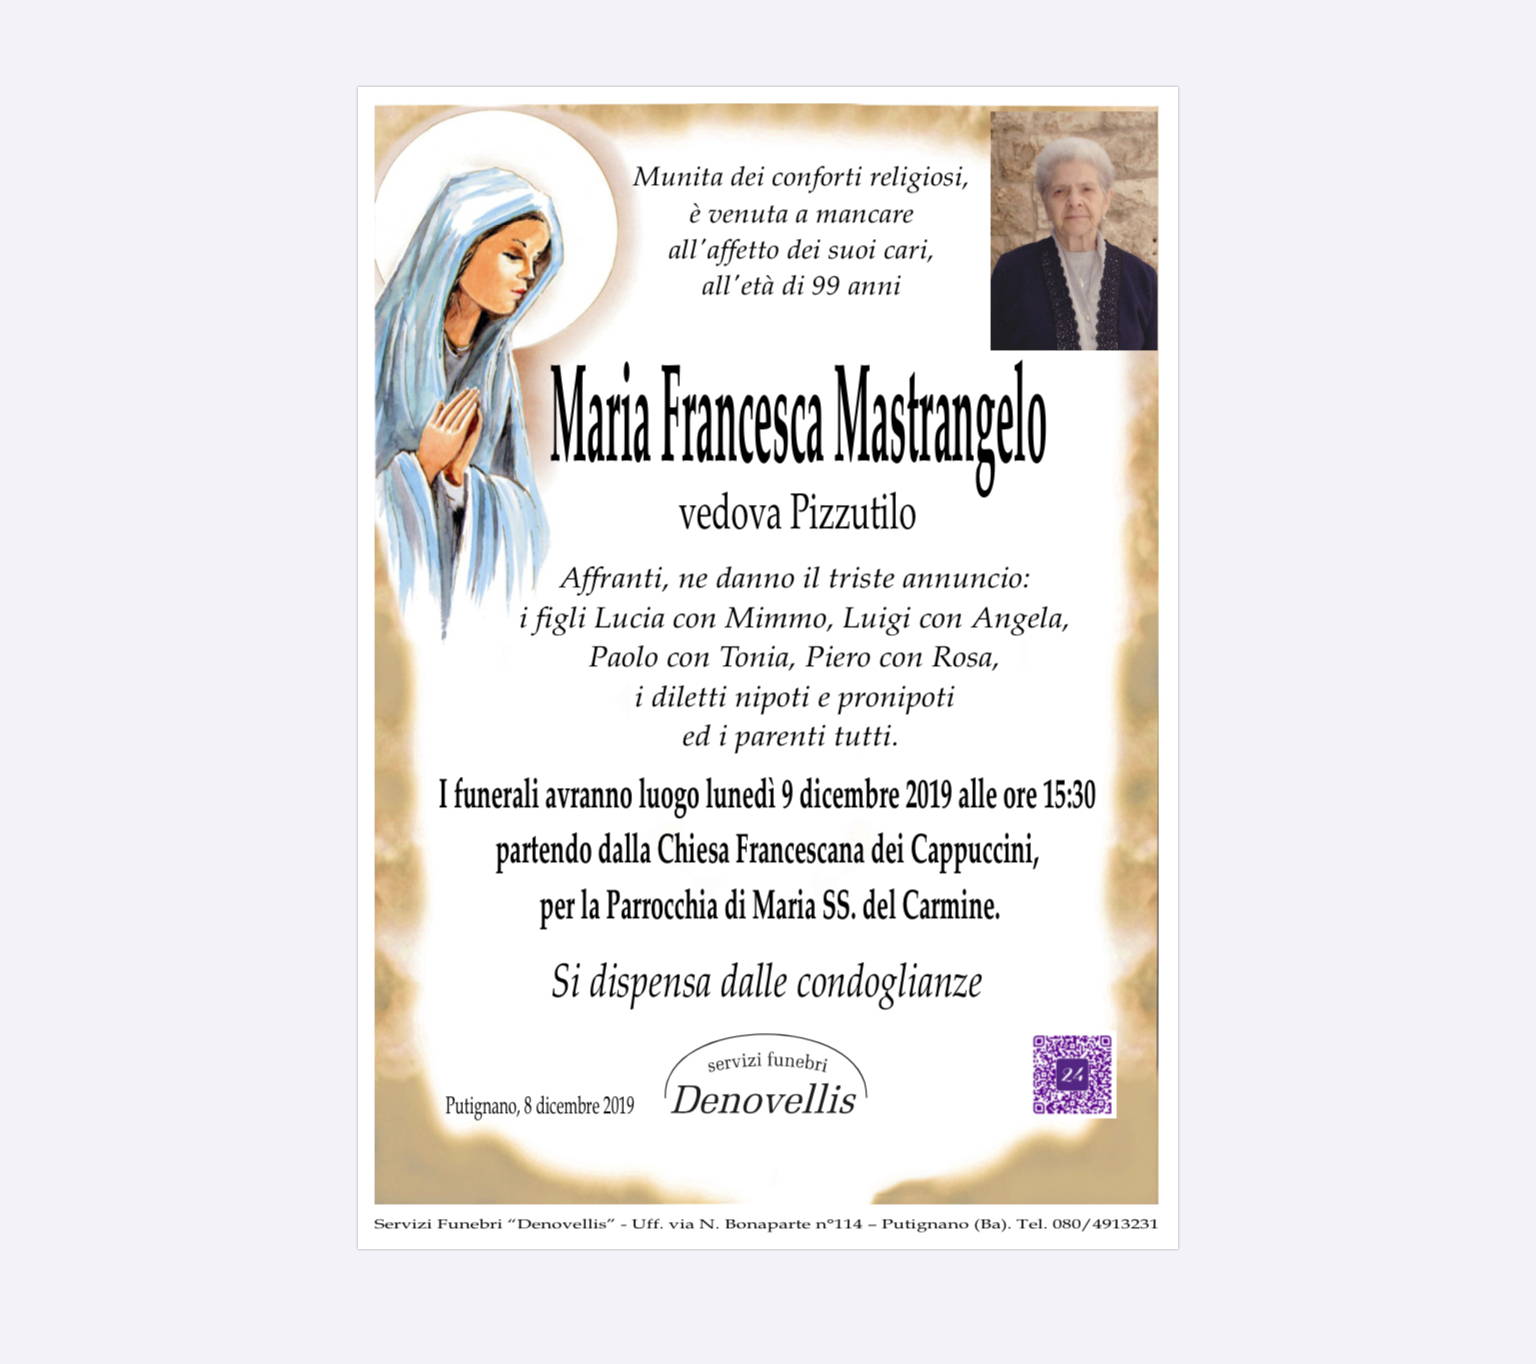 Maria Francesca Mastrangelo